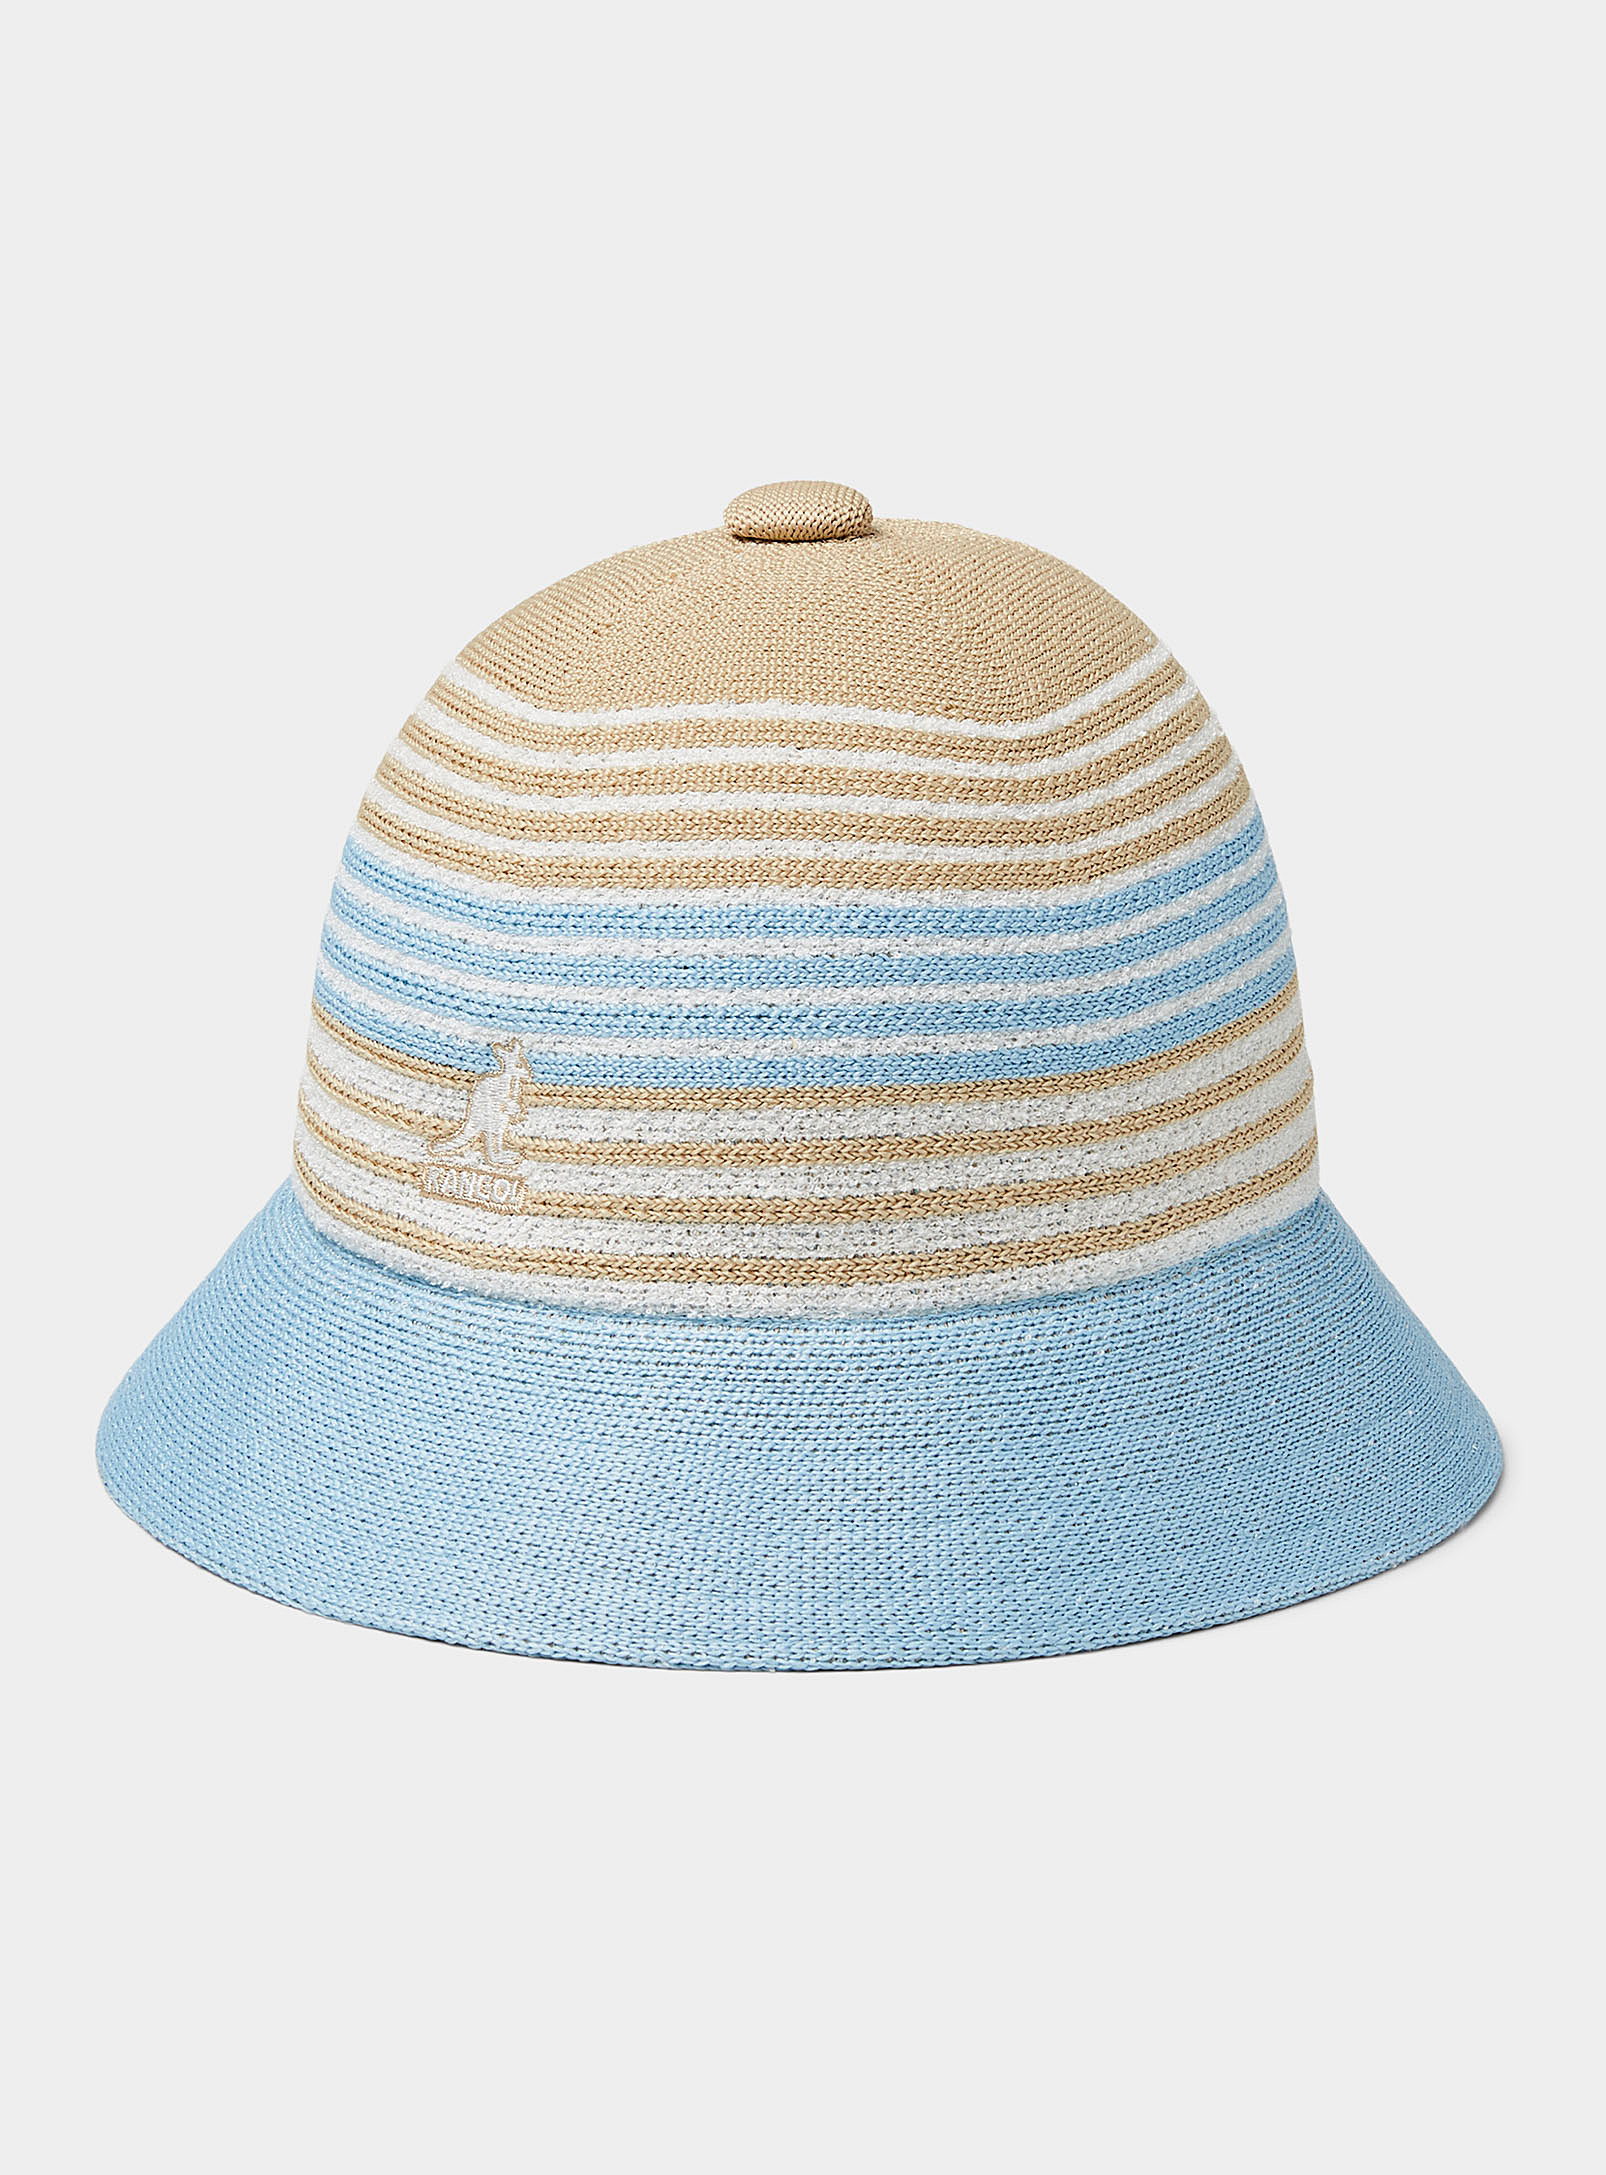 Kangol - Women's Striped knit Cloche Hat